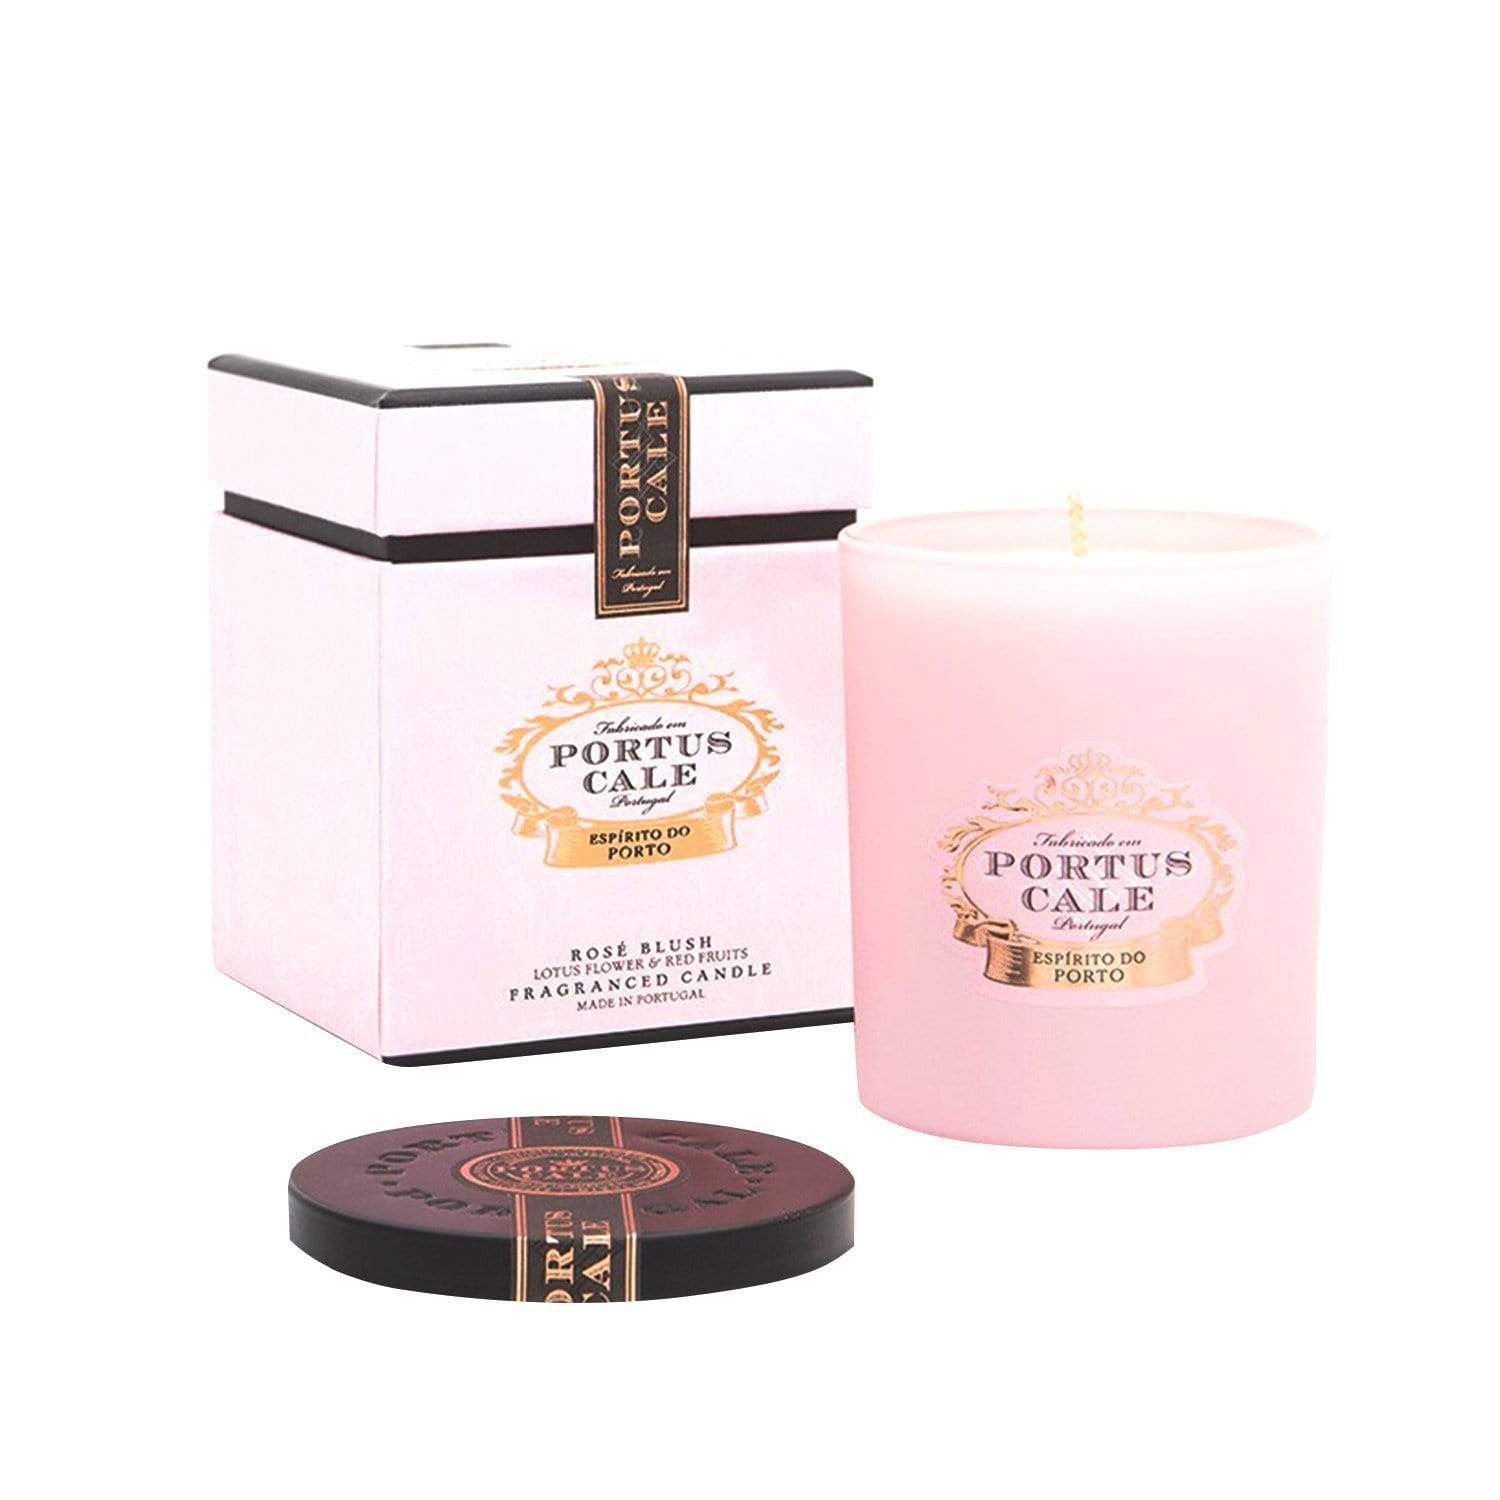 Castelbel Portus Cale Rose Blush Fragrance Candle - C2-2201 - Jashanmal Home